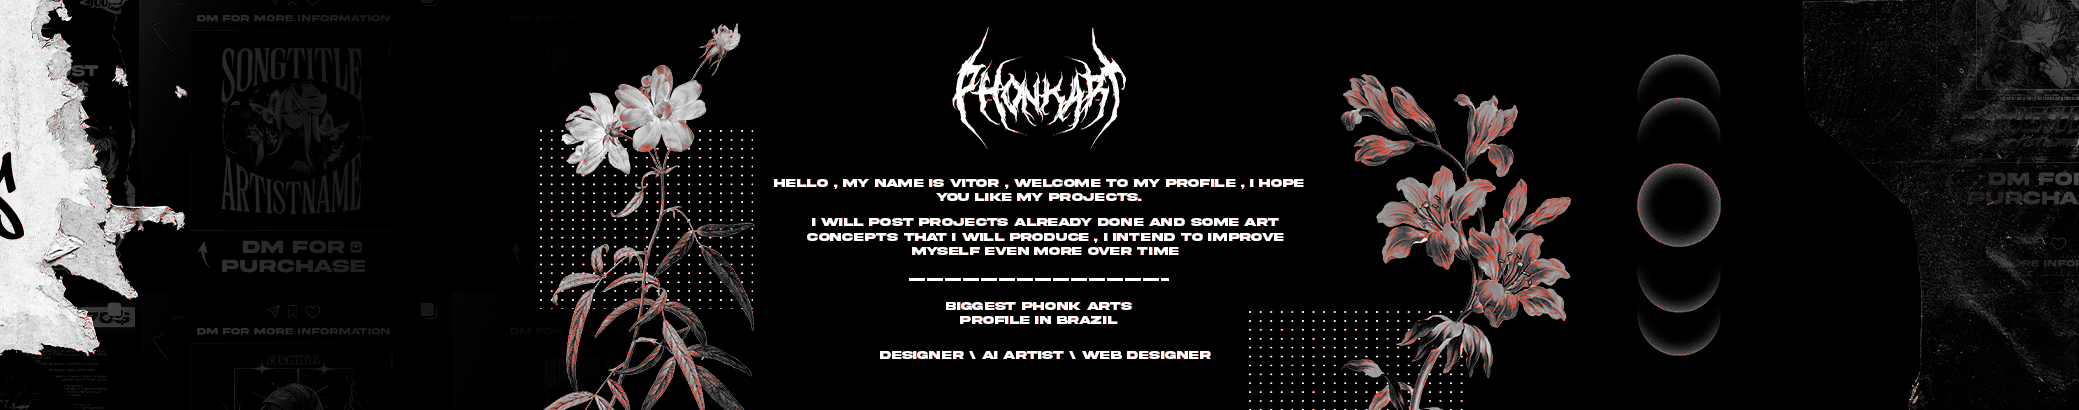 Phonk art's profile banner